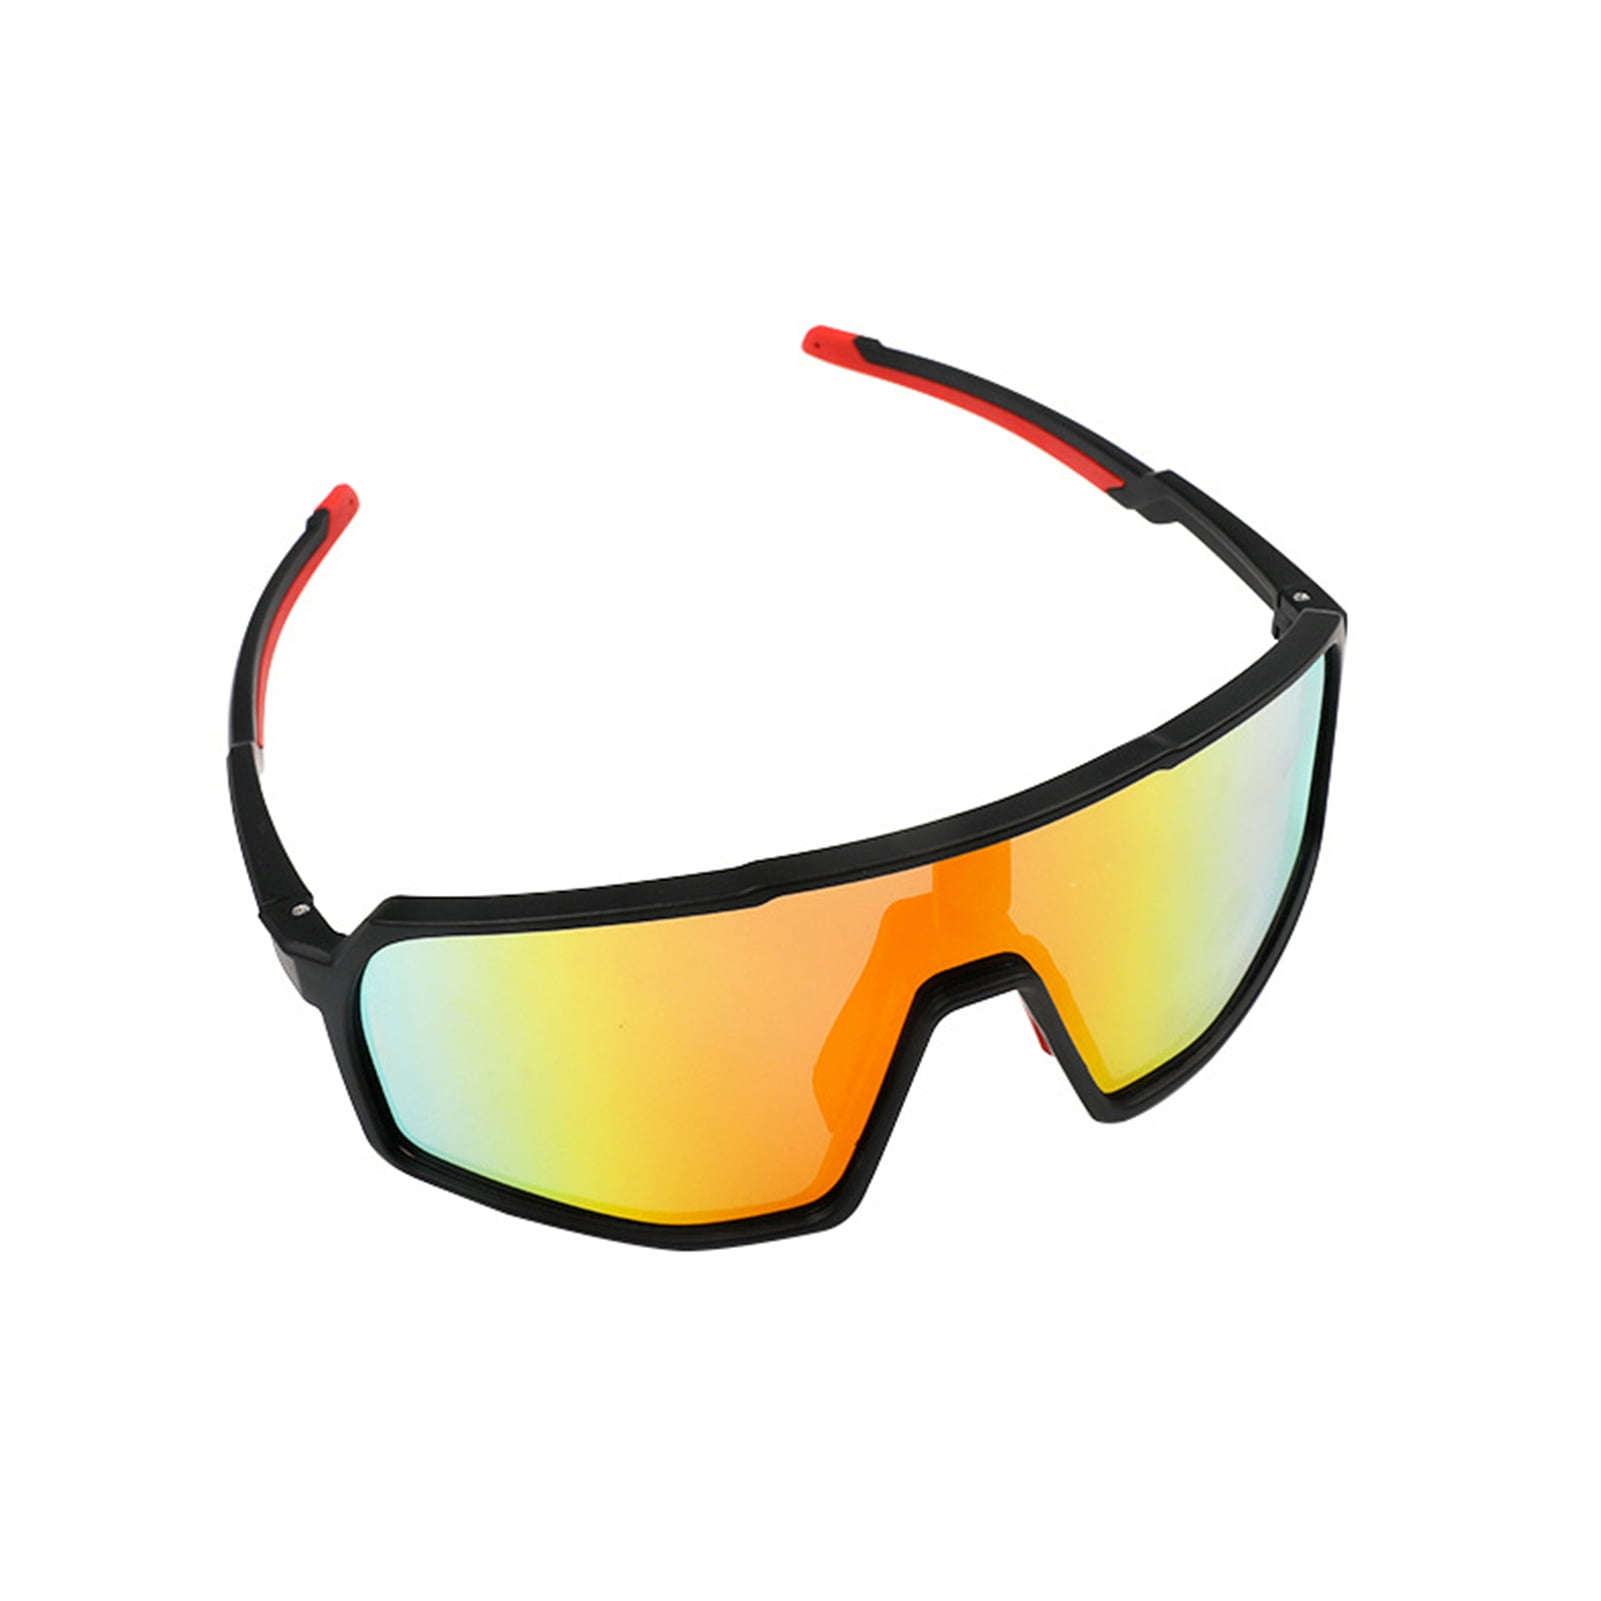 New Polarized Sports Sunglasses Eyewear for Cycling Riding Driving Fishing Golf1 